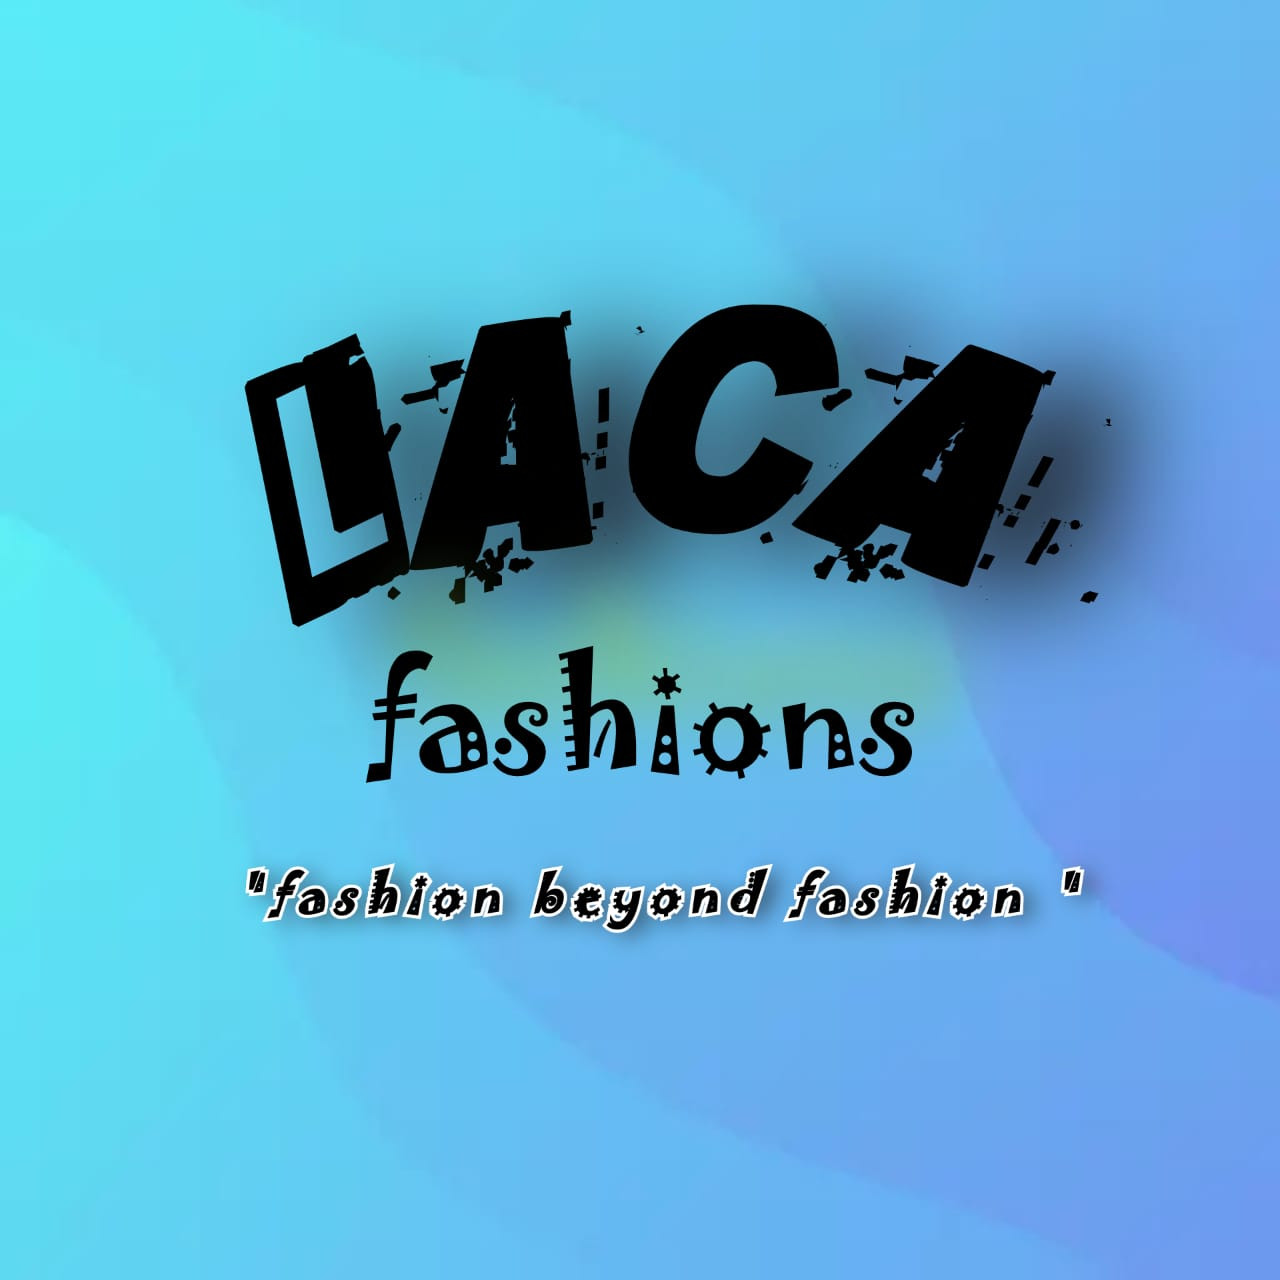 Laca fashions- Erca Enterprises